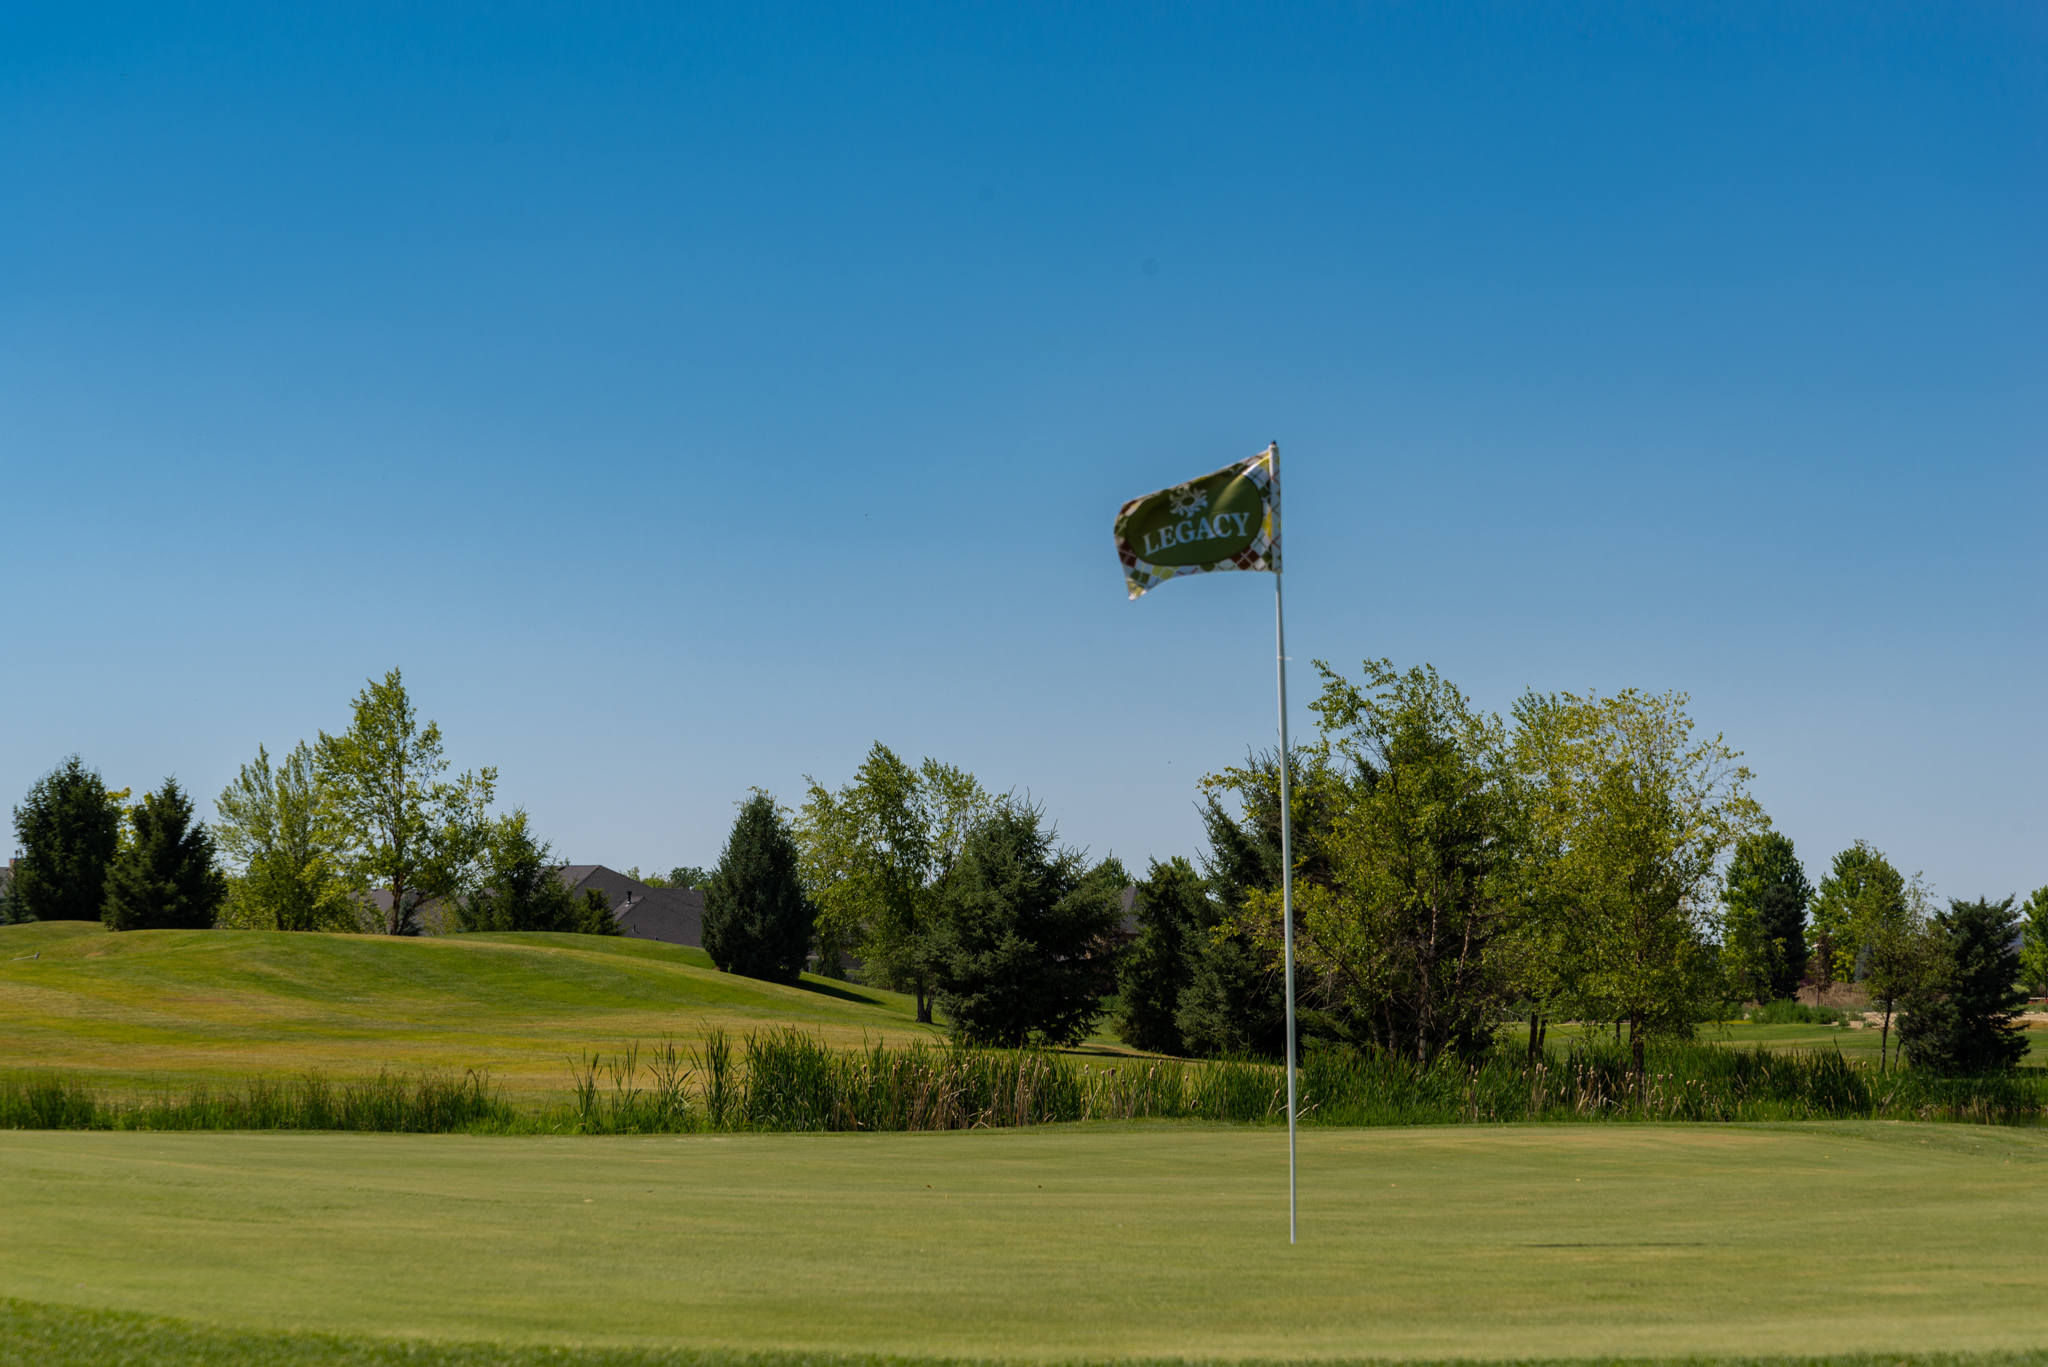 Legacy Community Golf Course